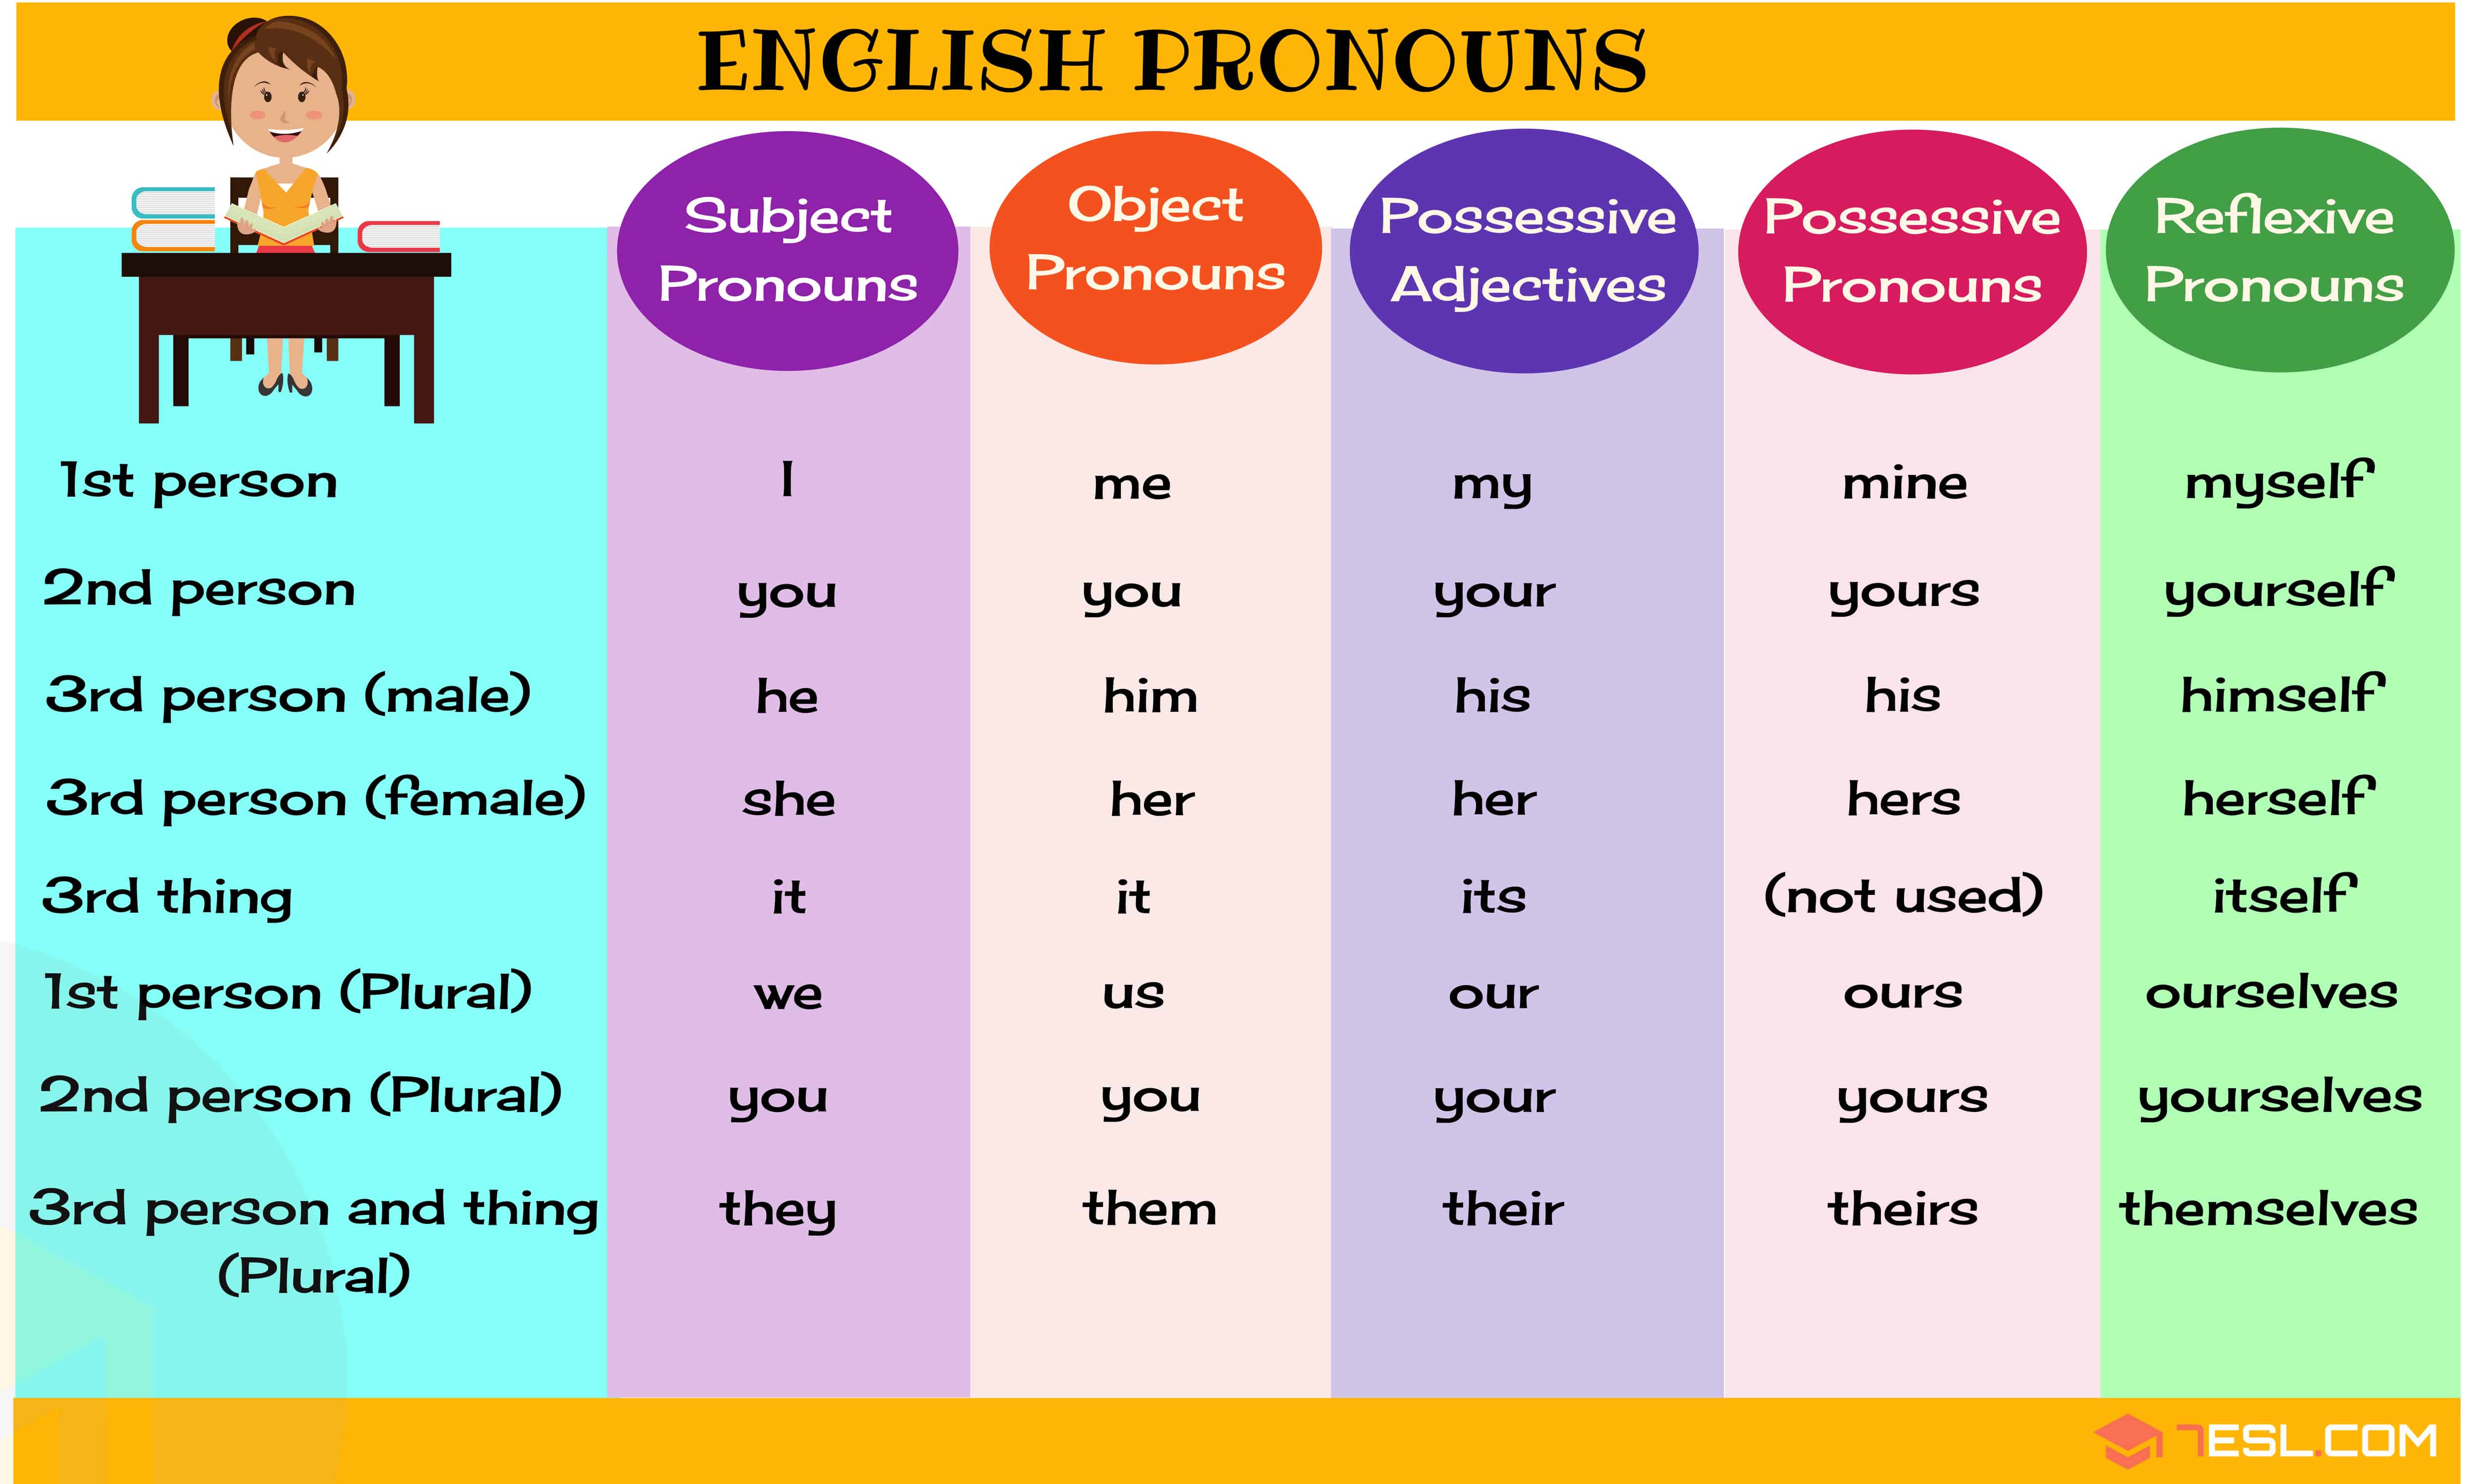 reflexive-pronoun-definition-list-and-examples-of-reflexive-pronouns